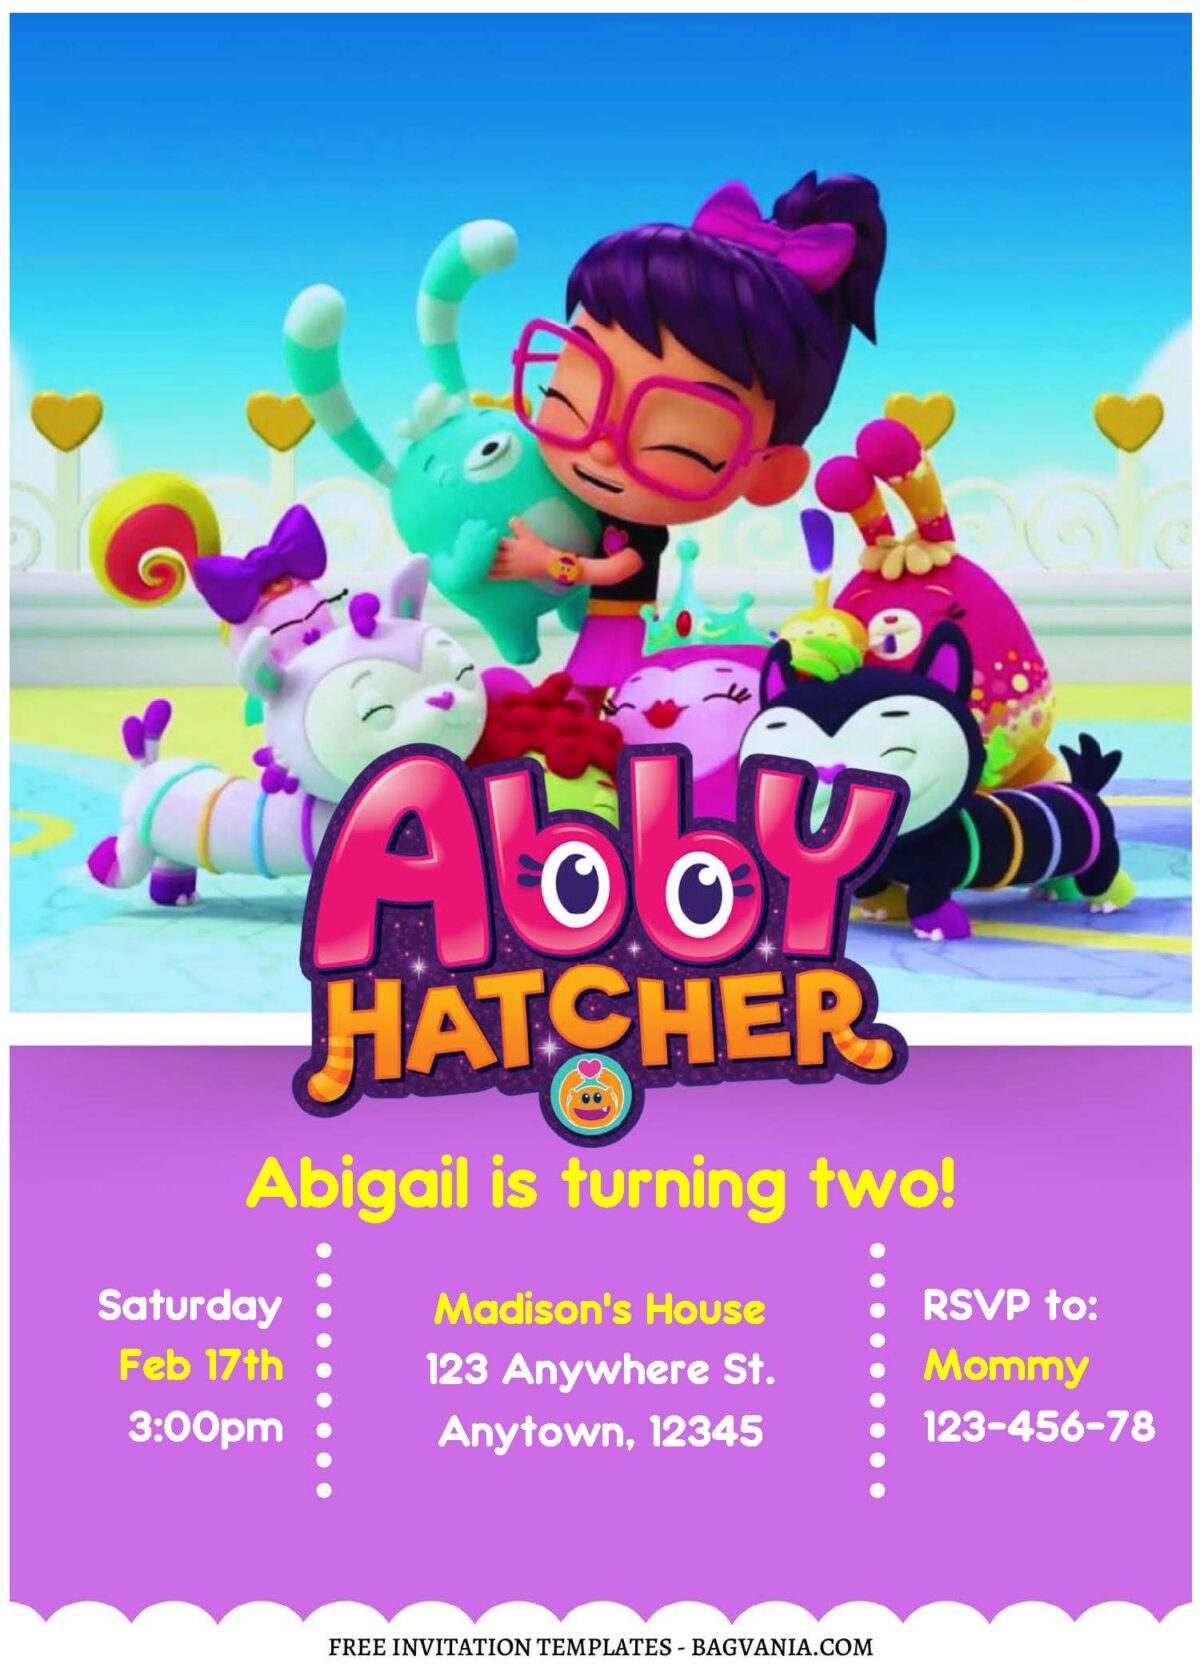 (Free Editable PDF) Shining Bright Abby Hatcher Birthday Invitation Templates A